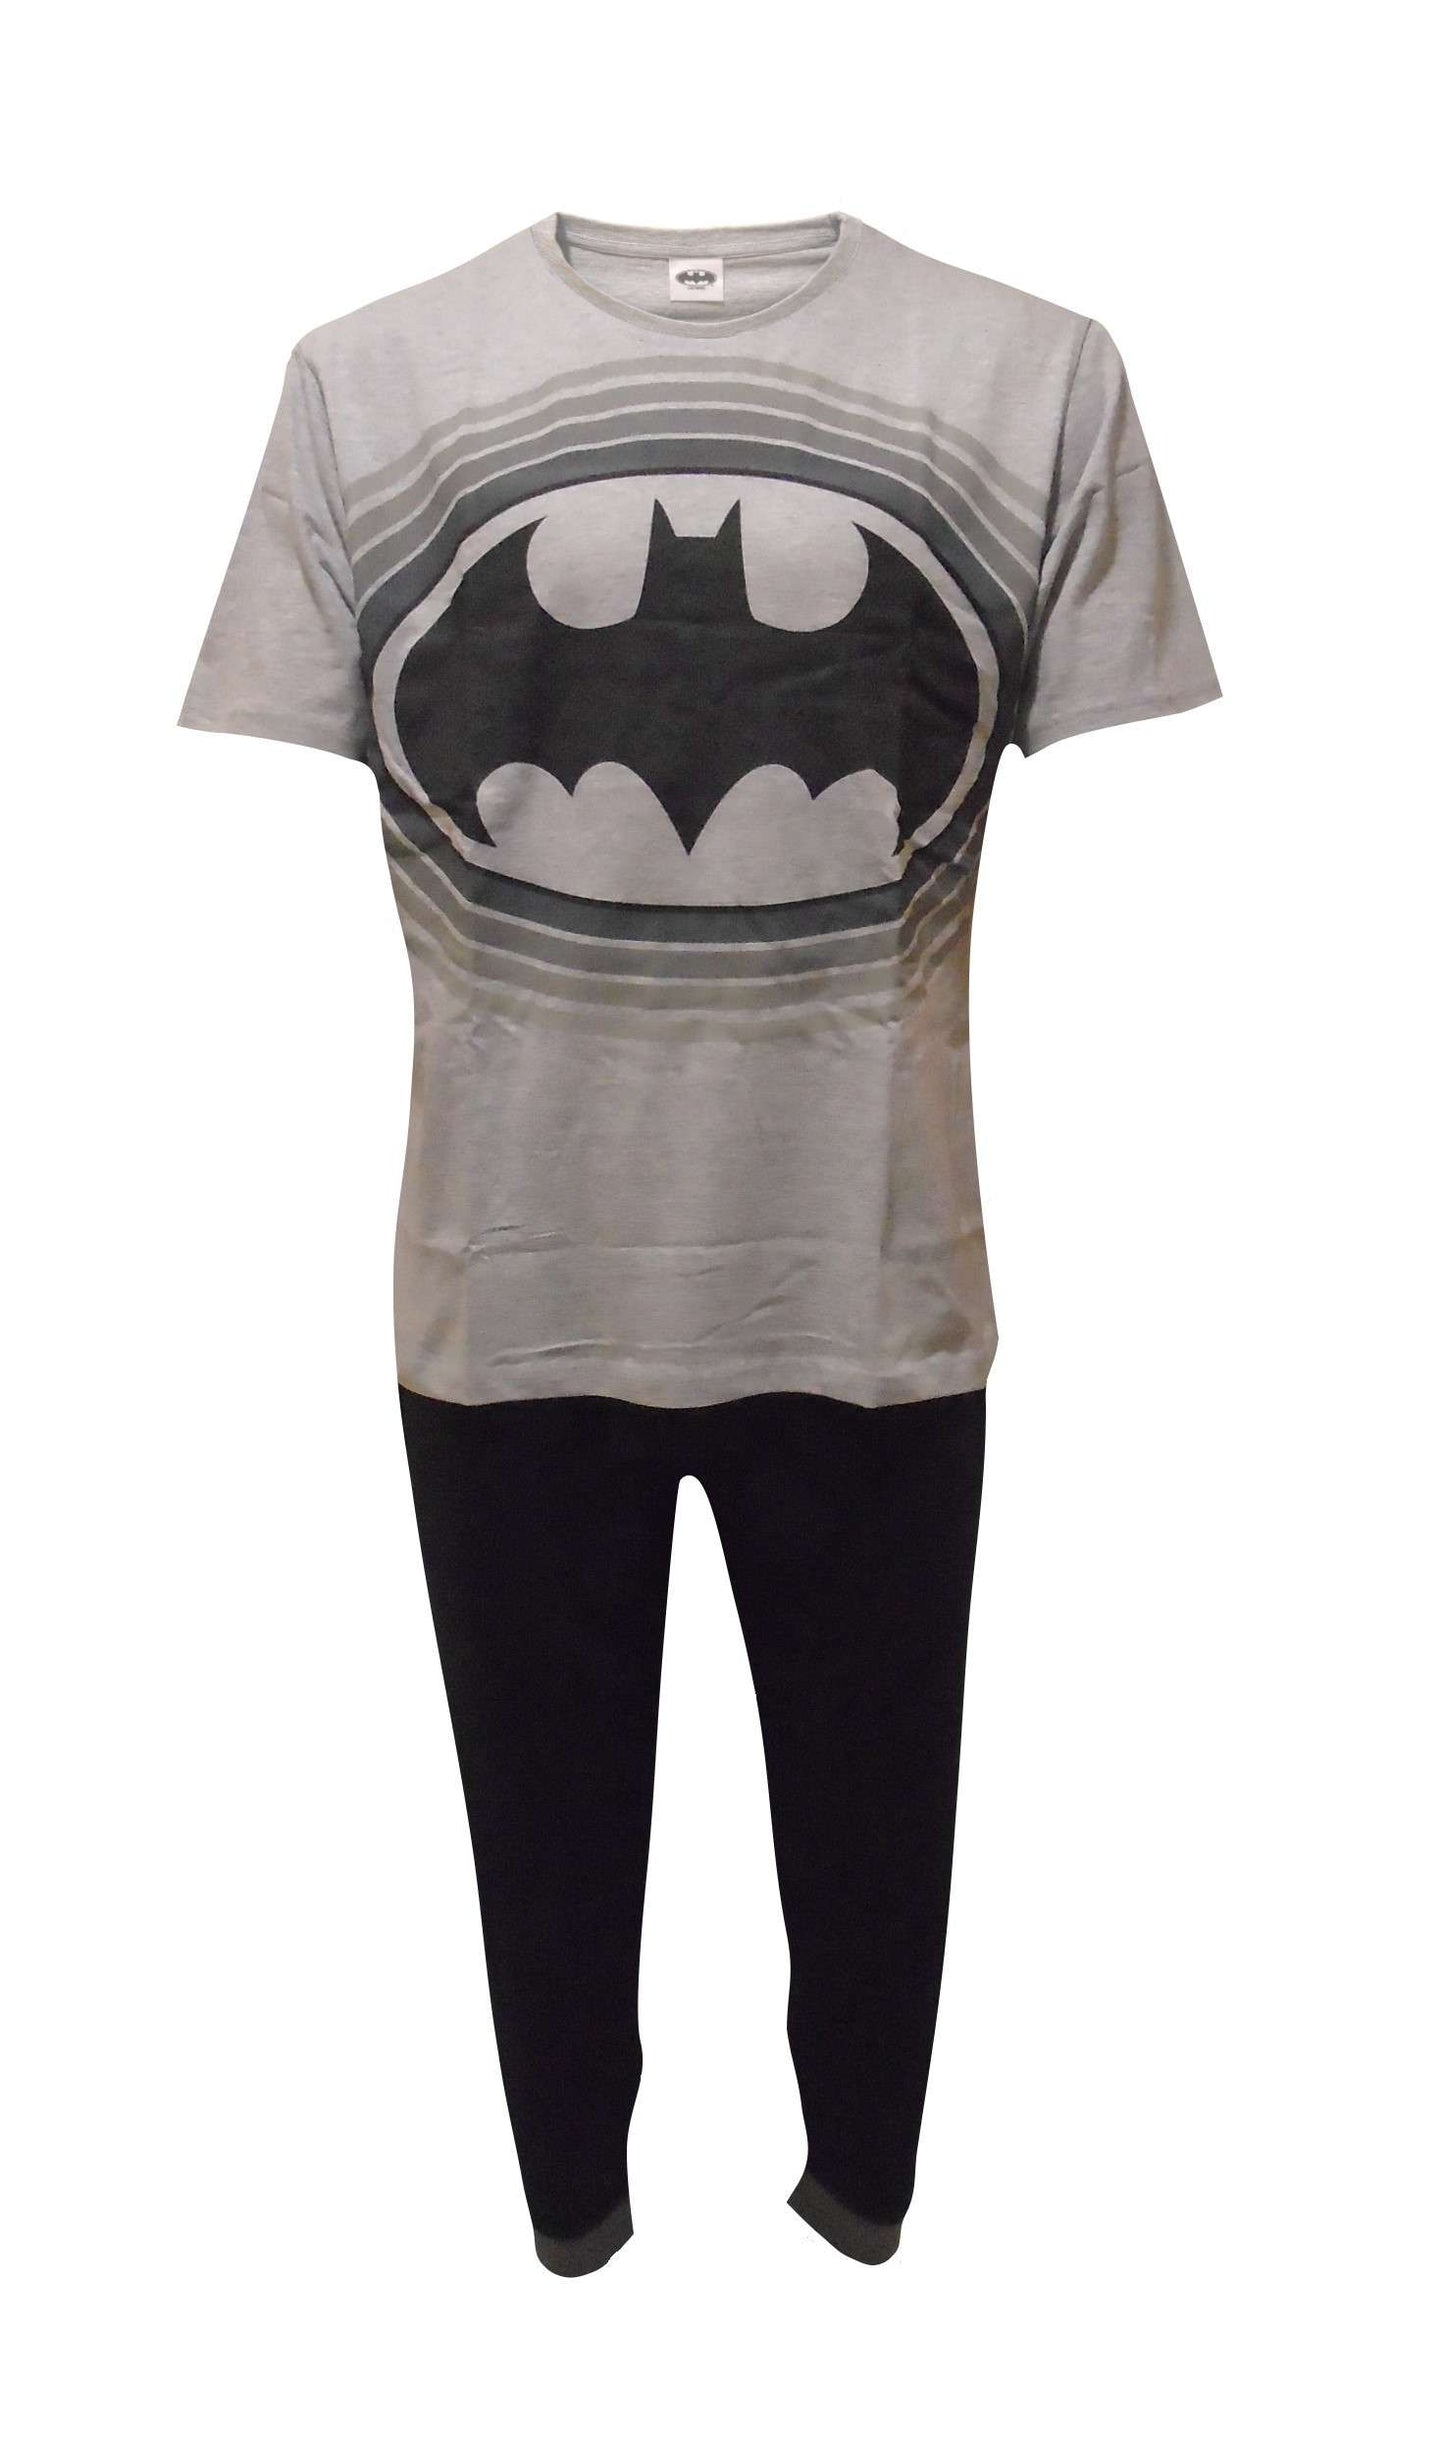 Batman "Bat Logo" Men's Two Piece Pyjama Set